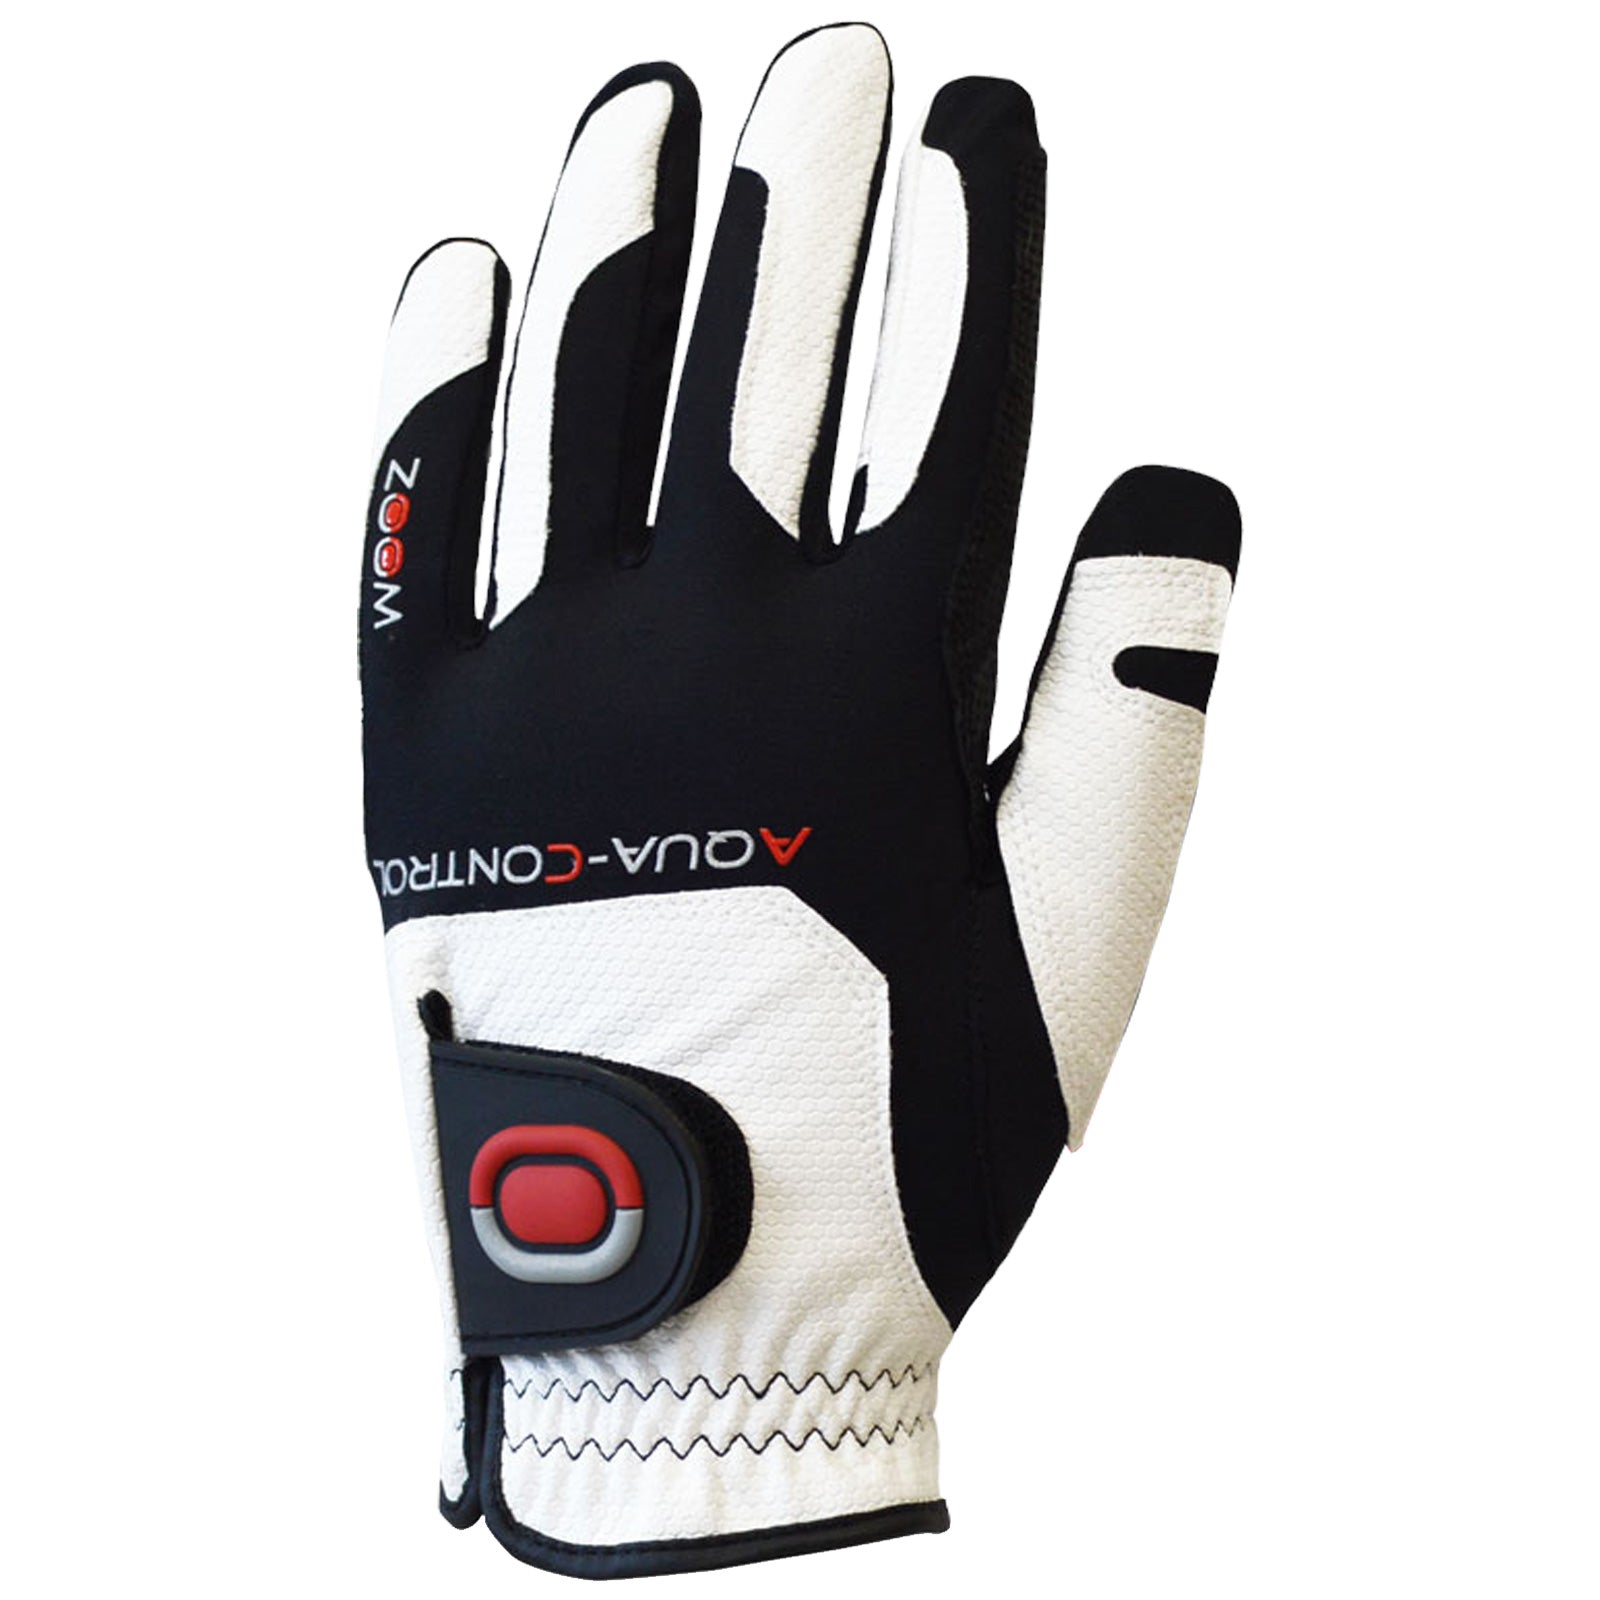 Zoom Ladies Left Hand Flexx Fit AQUA CONTROL Golf Glove - One Size